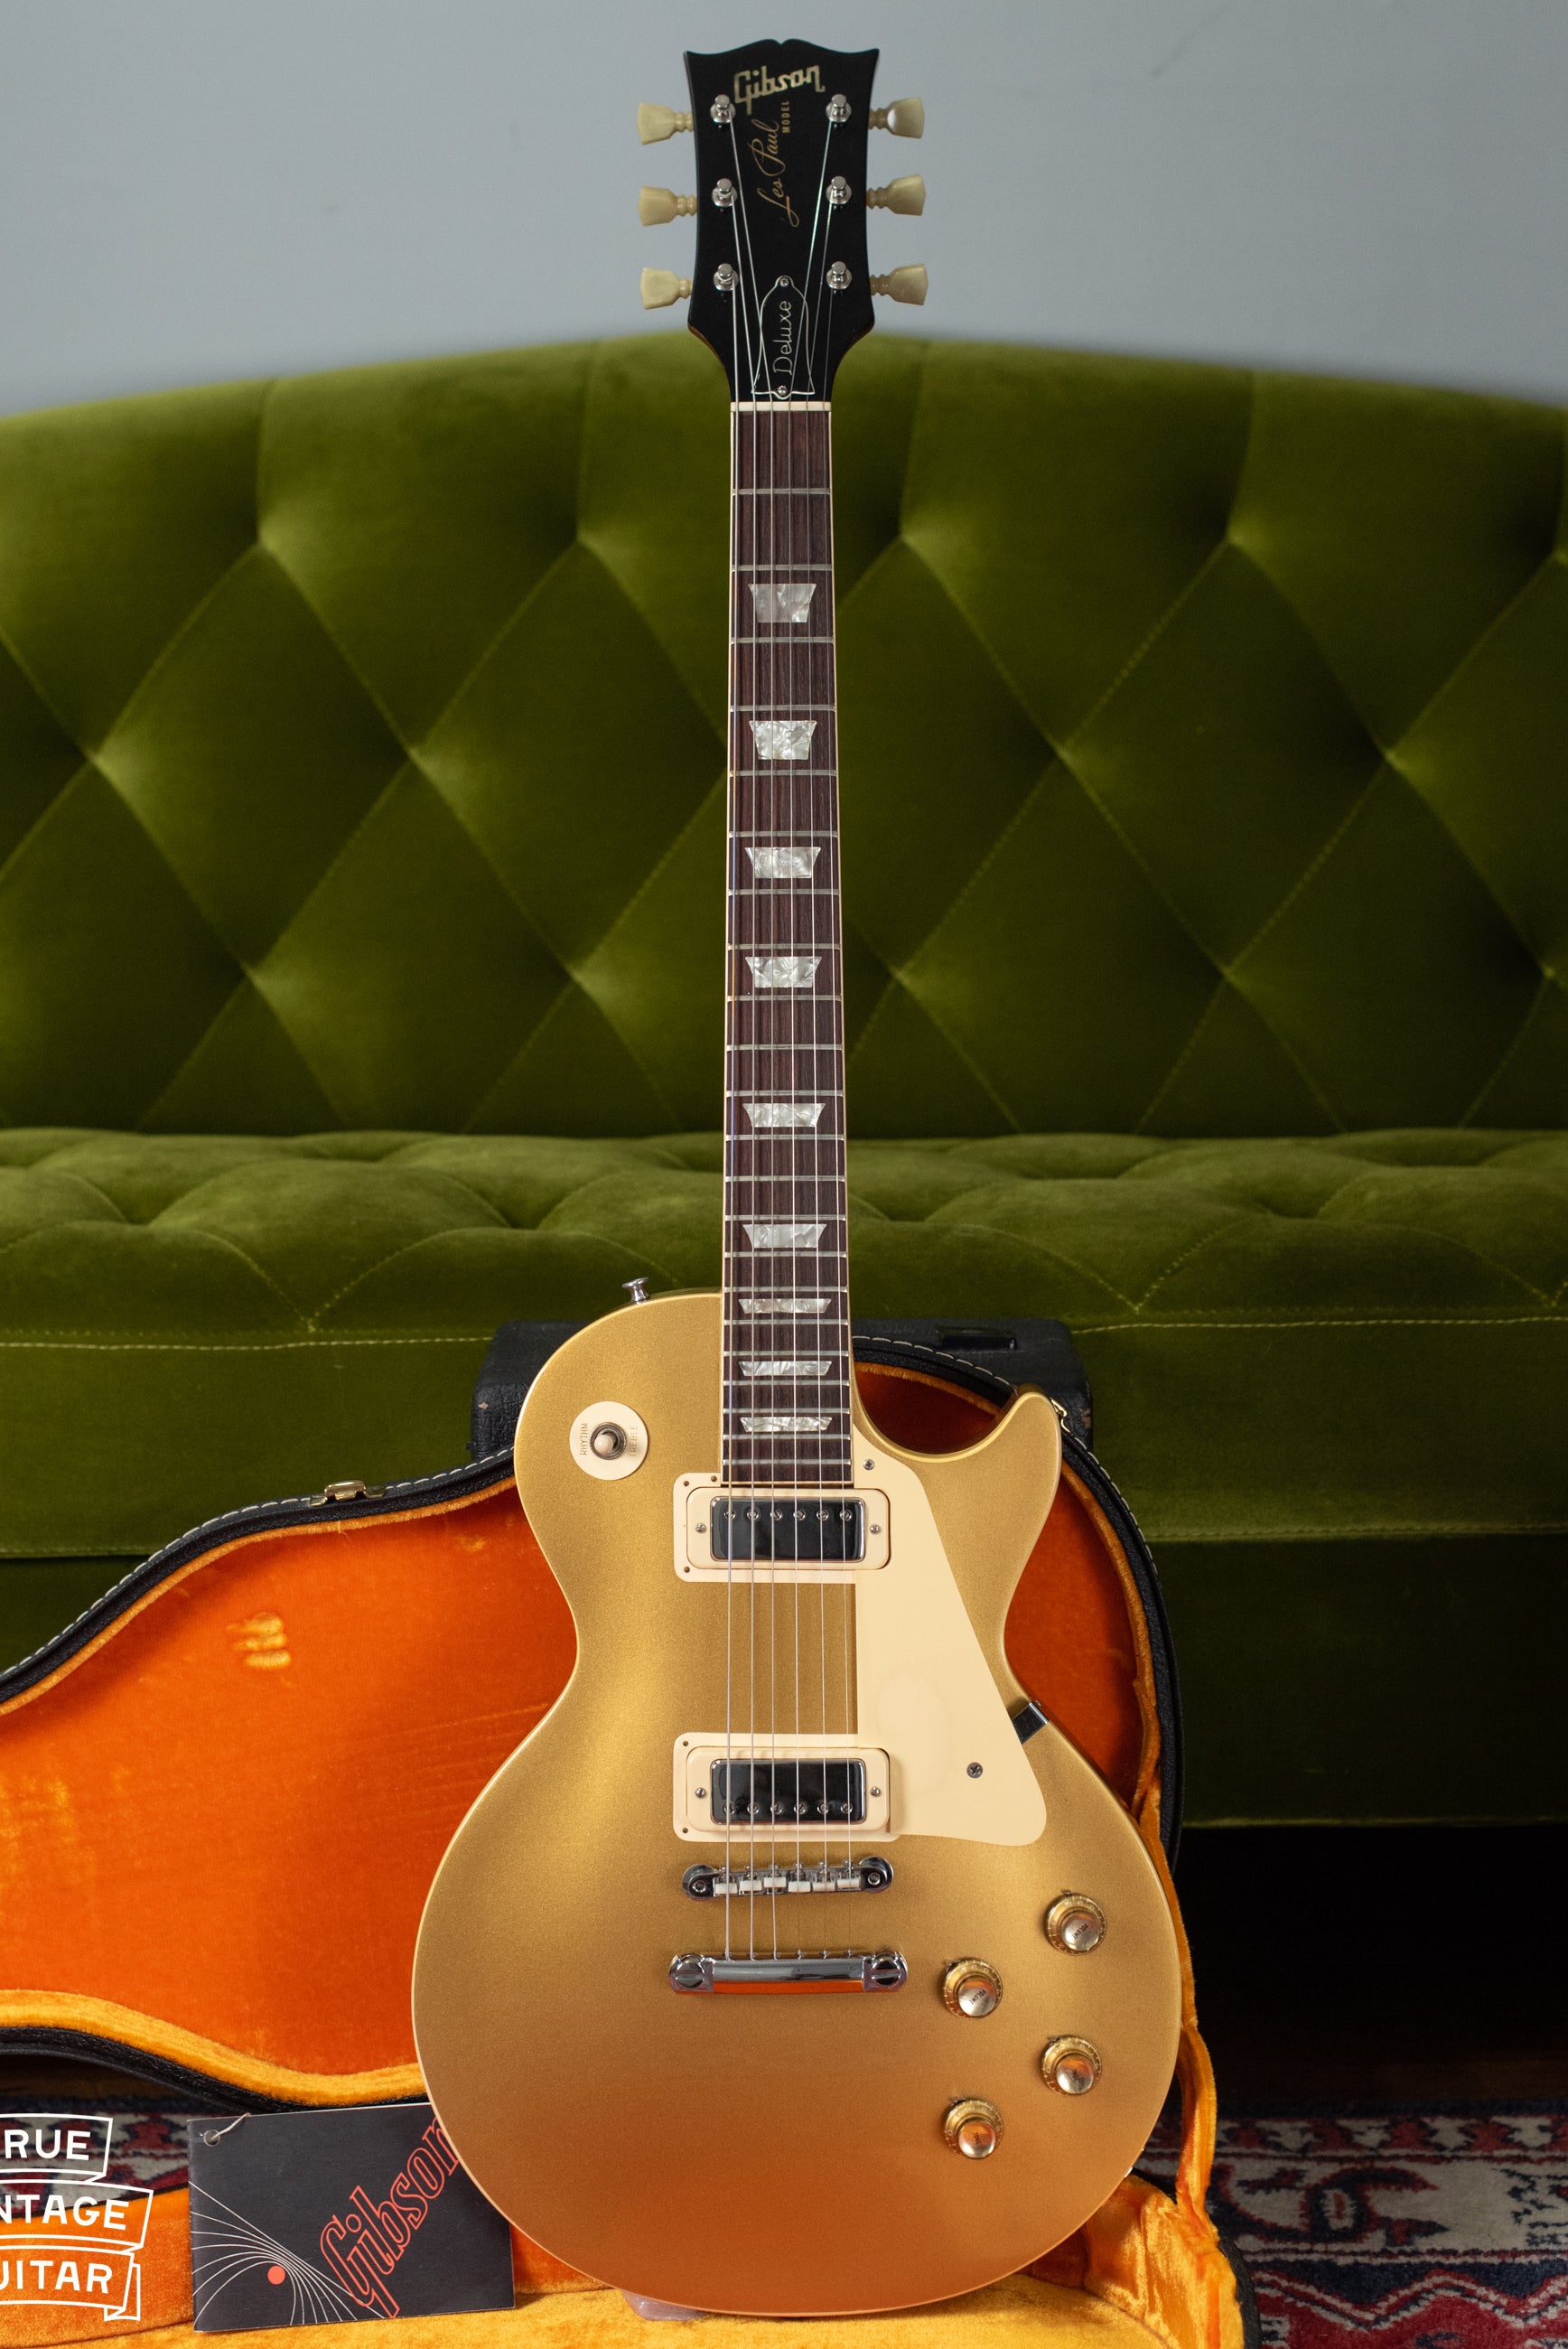 Vintage Gibson Les Paul gold guitar